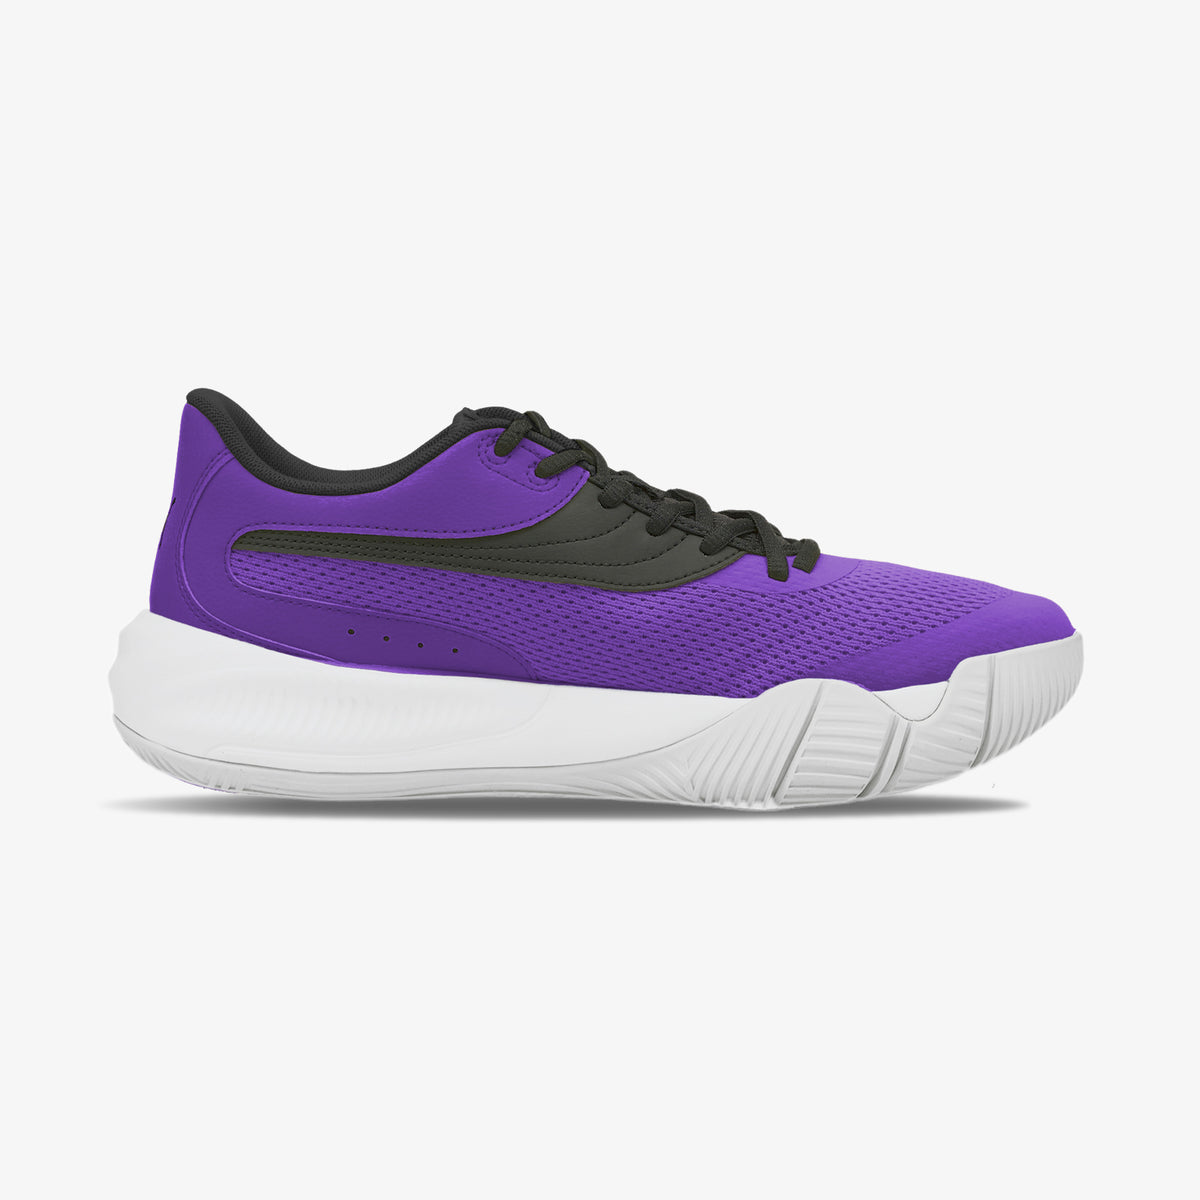 Triple Basketball Shoes - Violet/Spectra